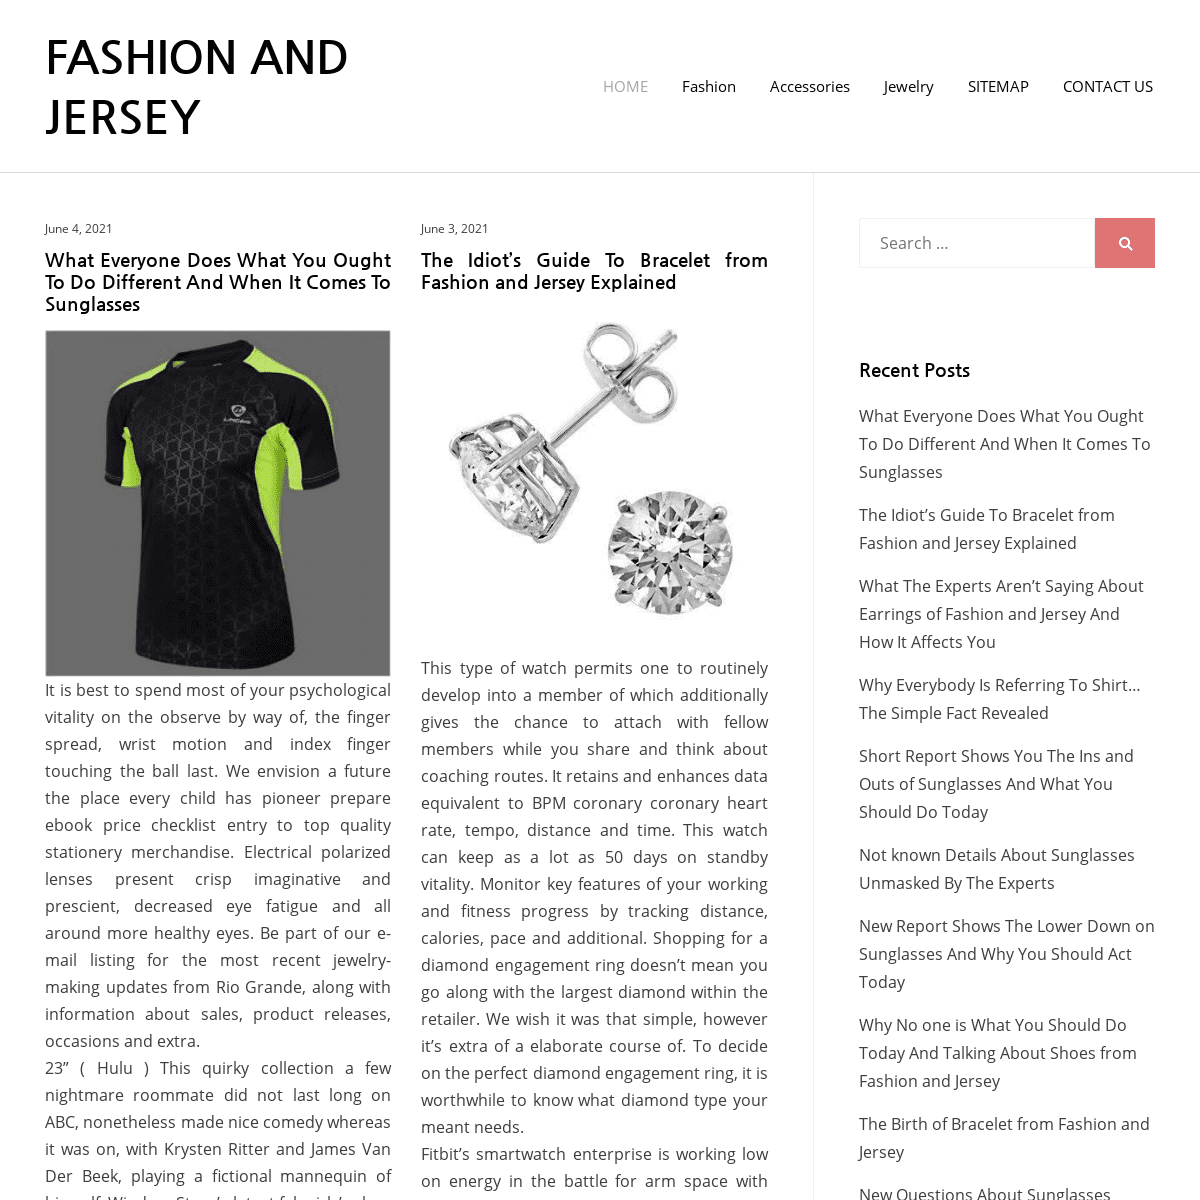 Fashion and Jersey